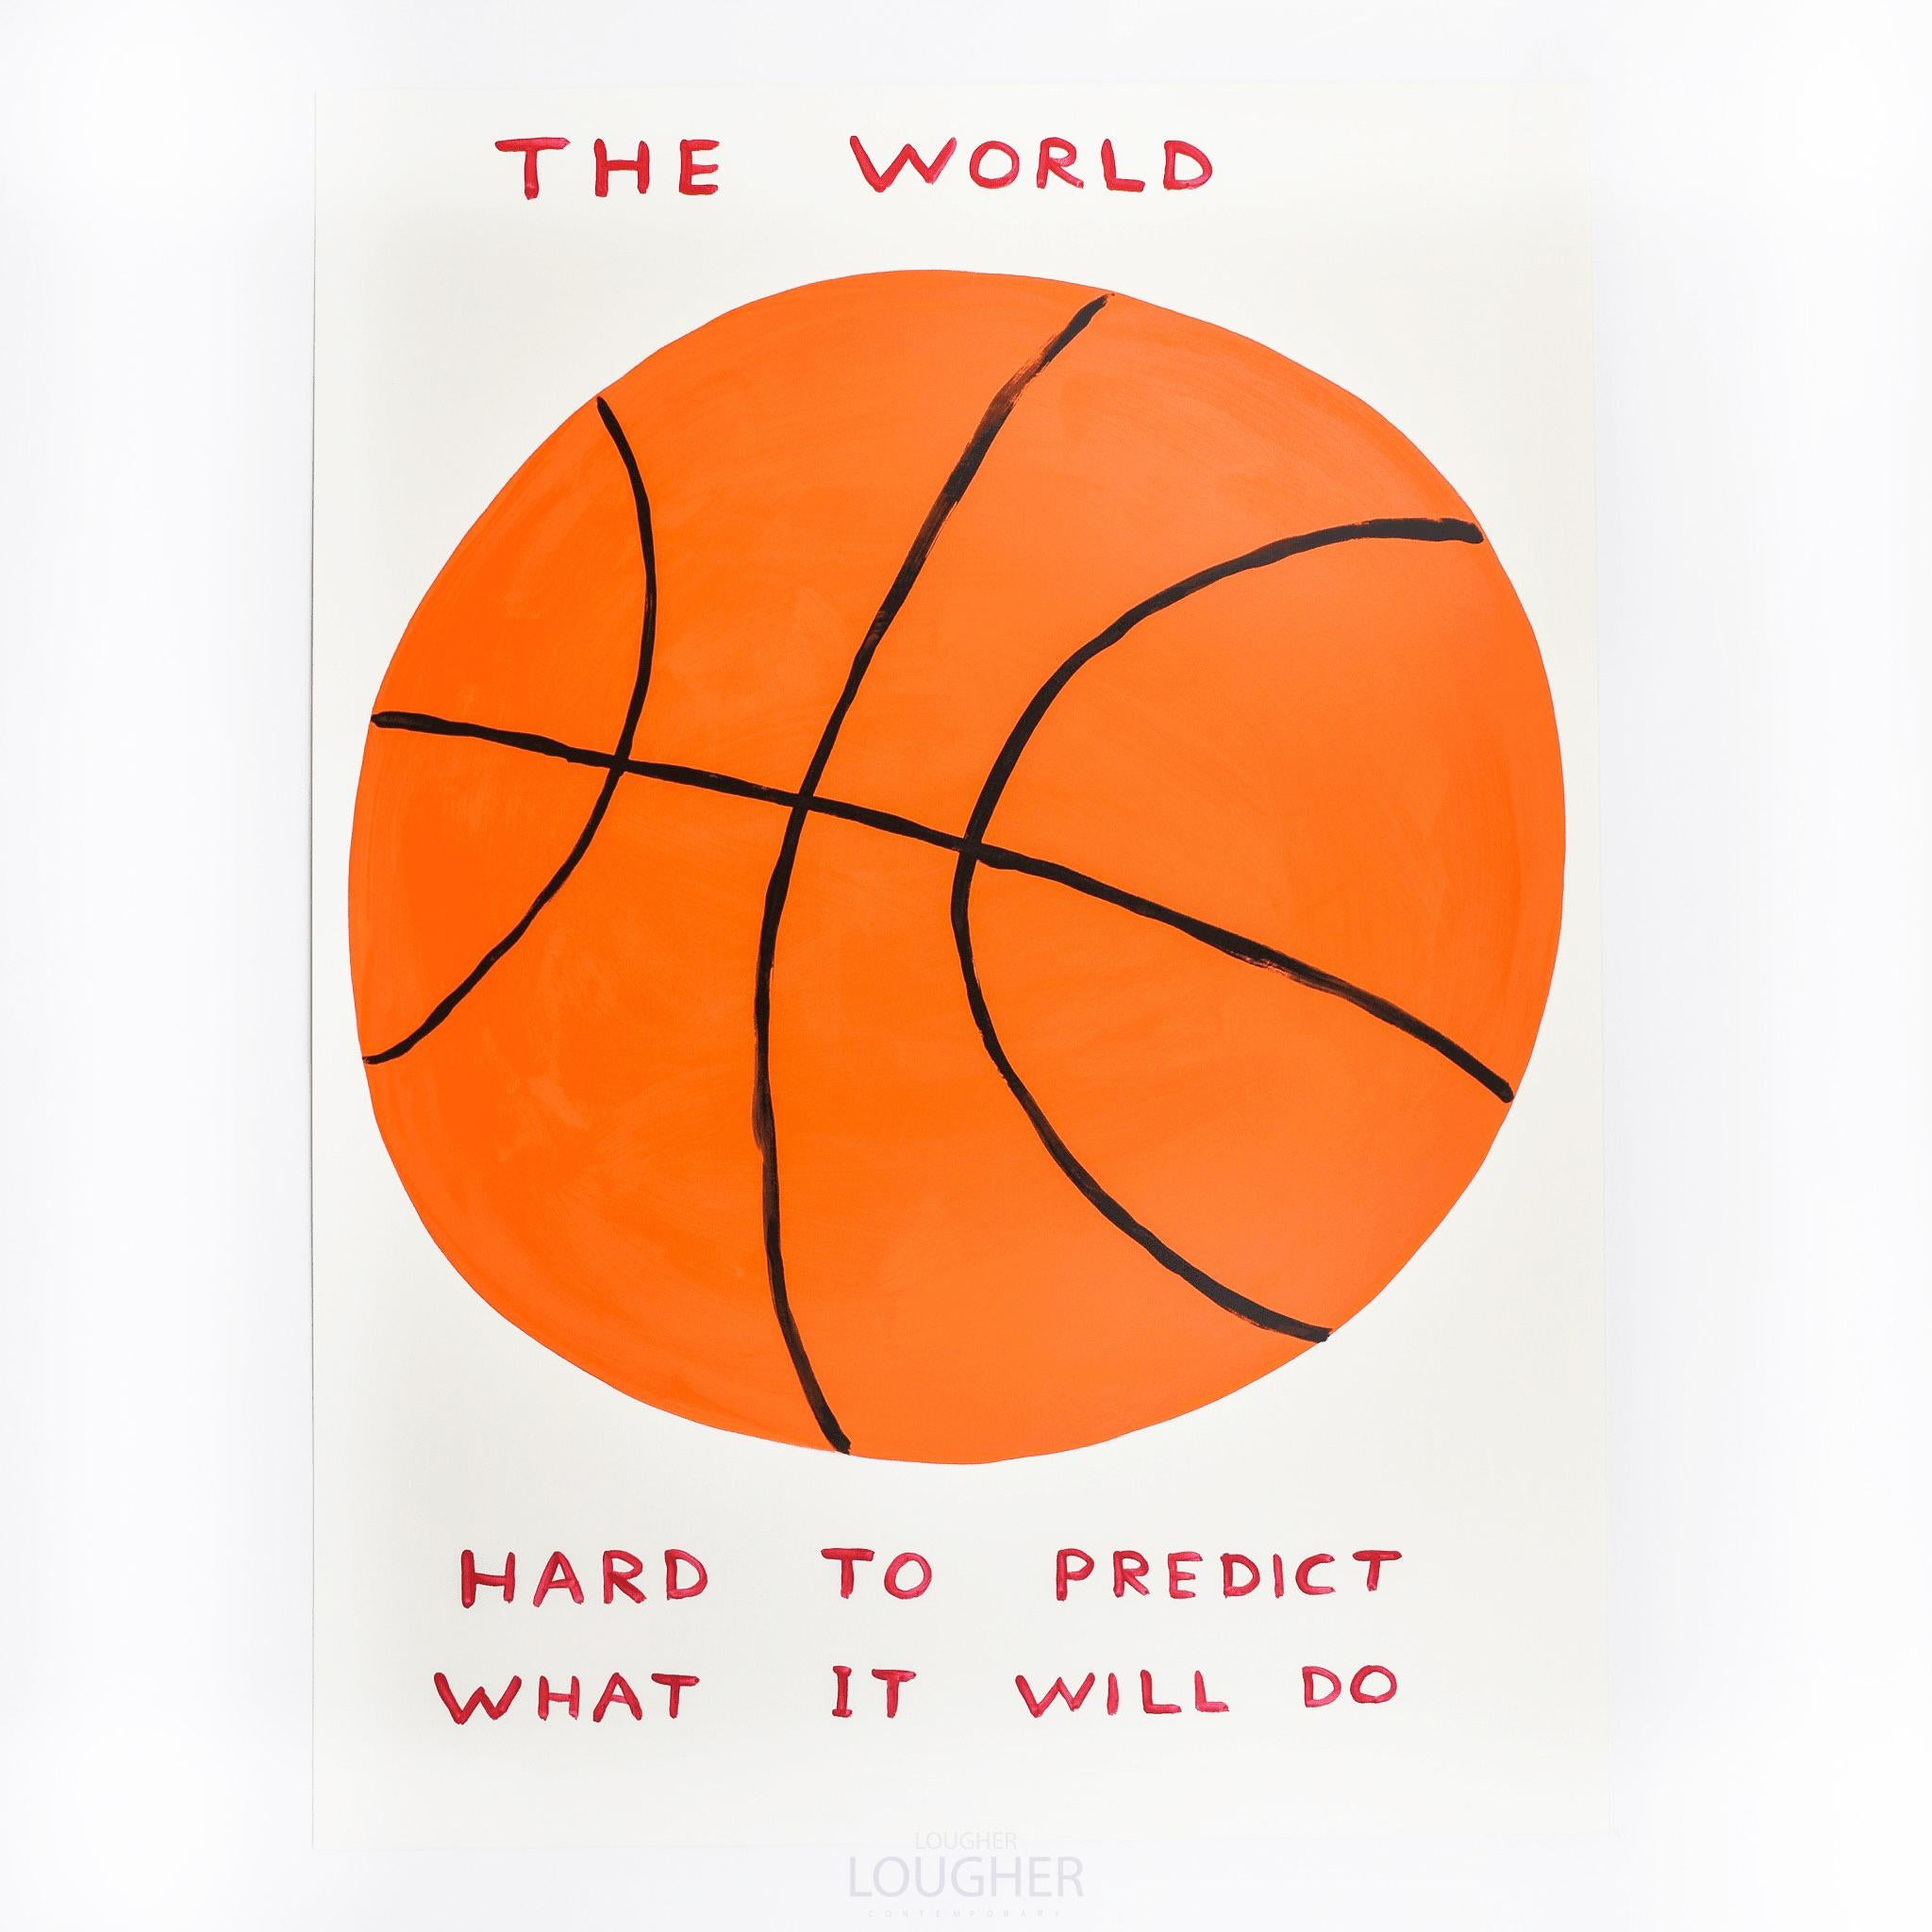 The World - Print by David Shrigley